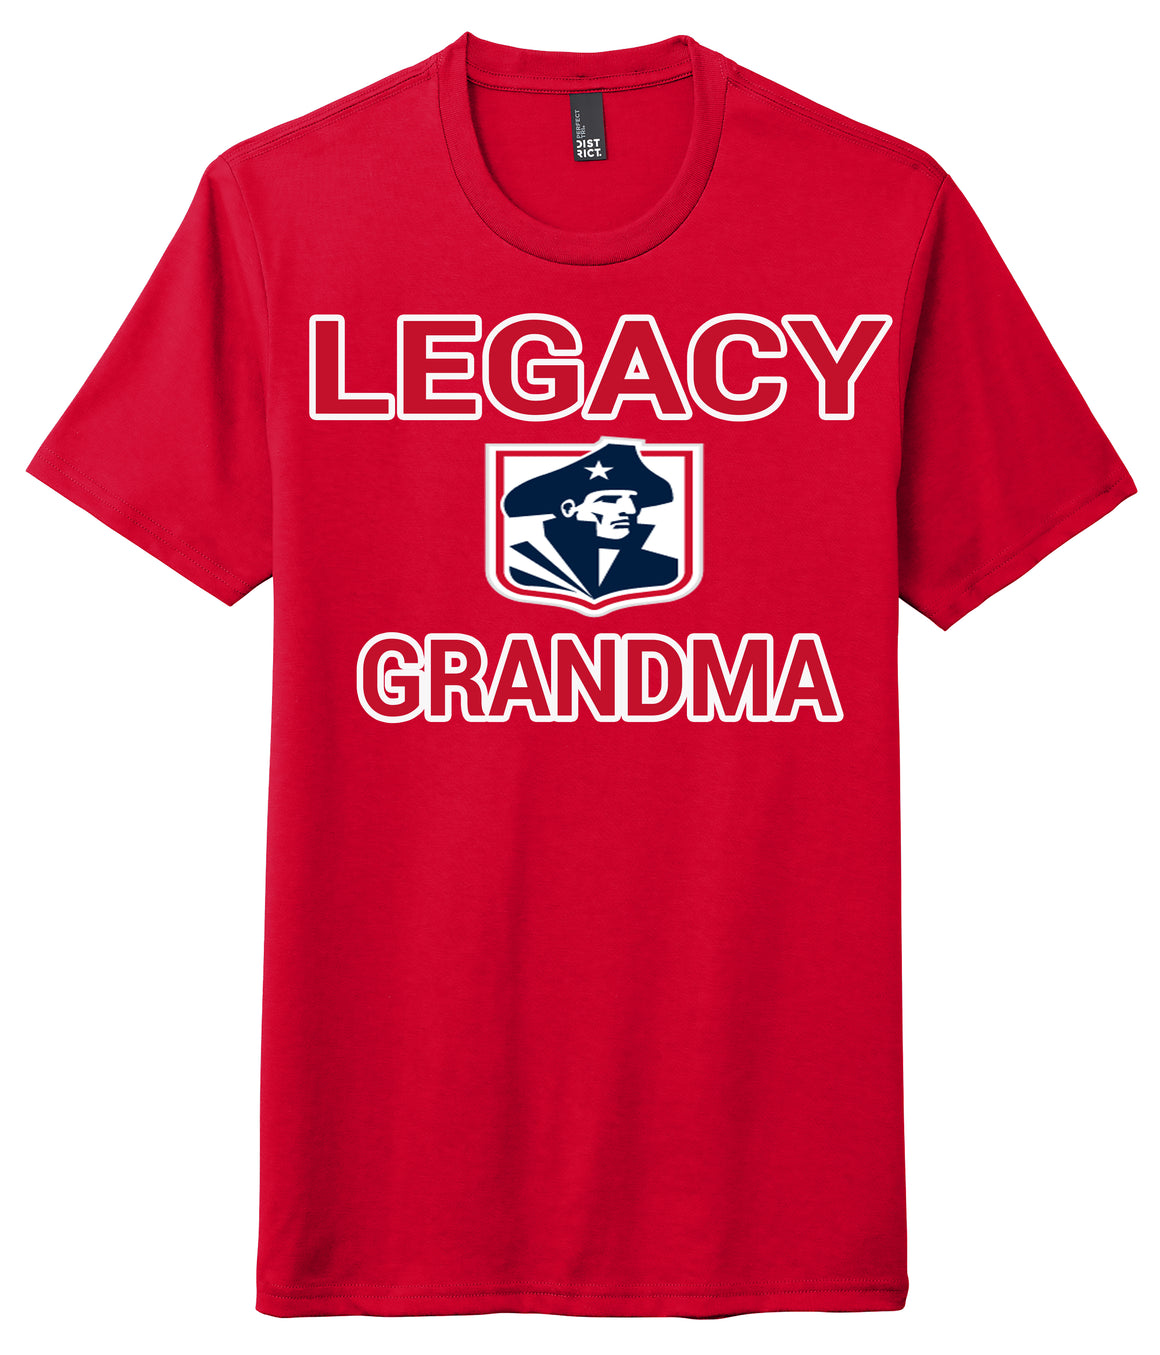 Legacy Traditional School Queen Creek - Grandma Shirt